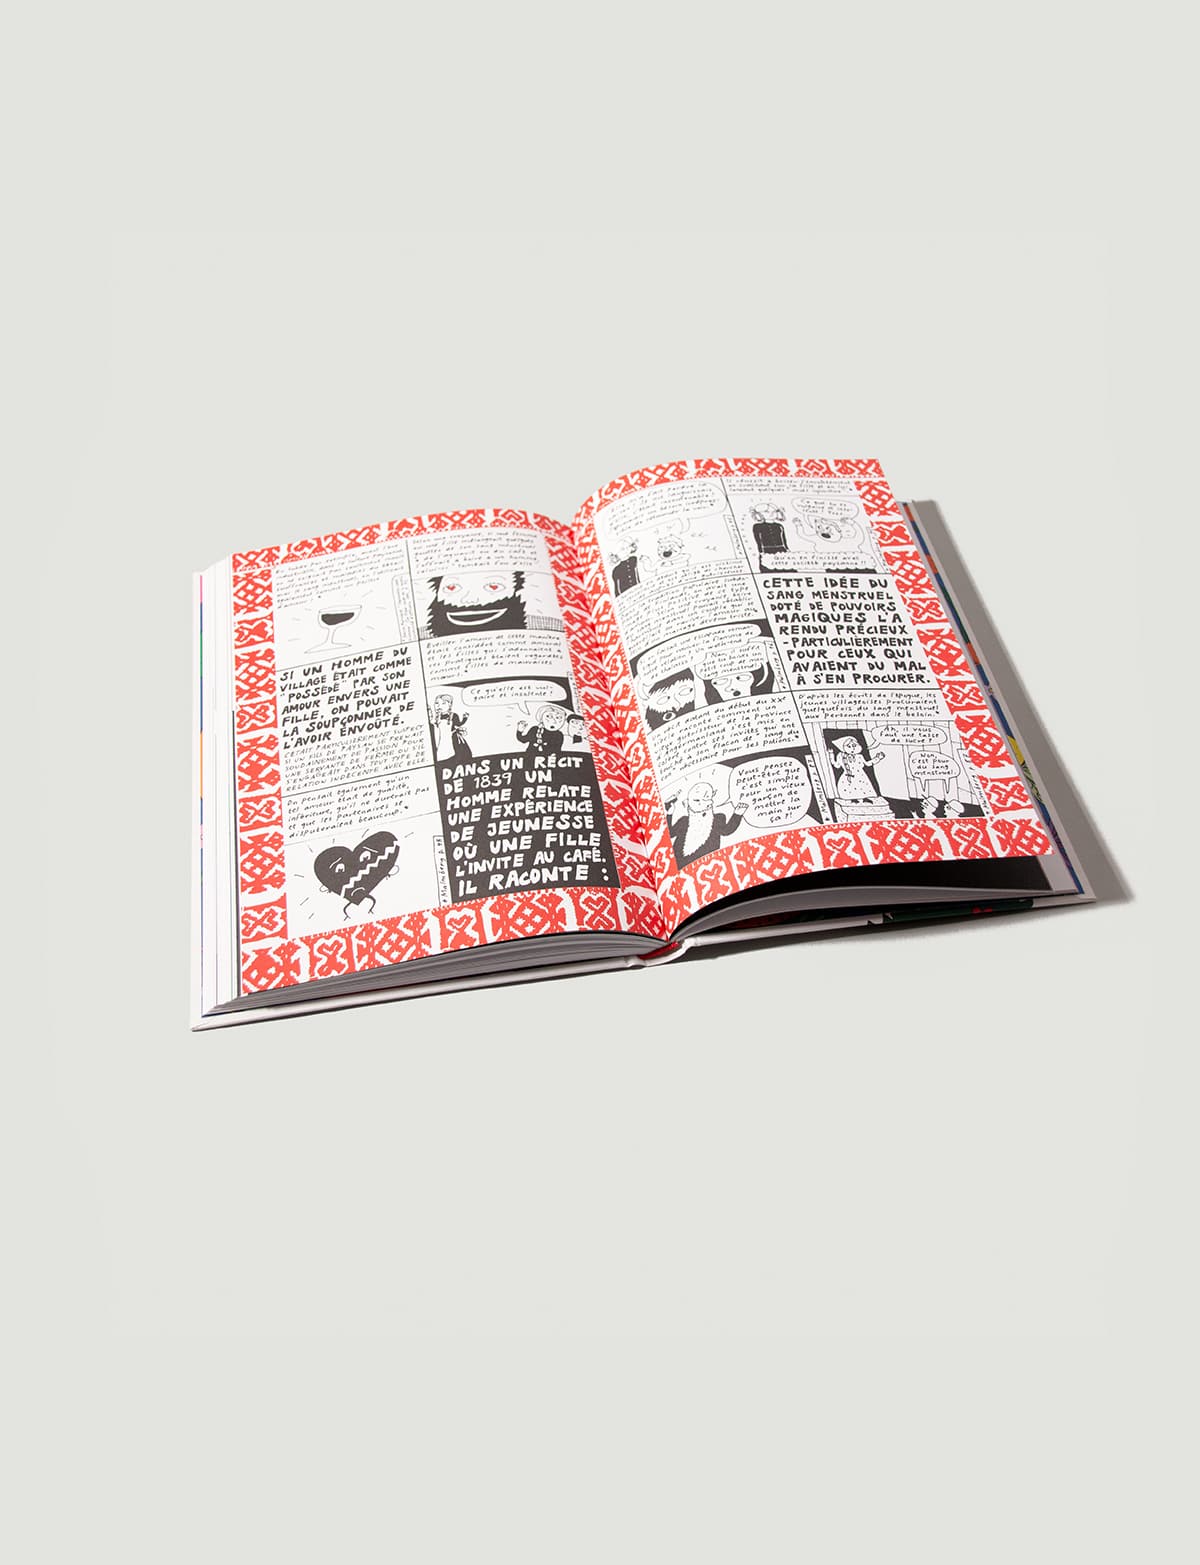 Jüne Plã Bliss Club illustrated manual • Afterglo